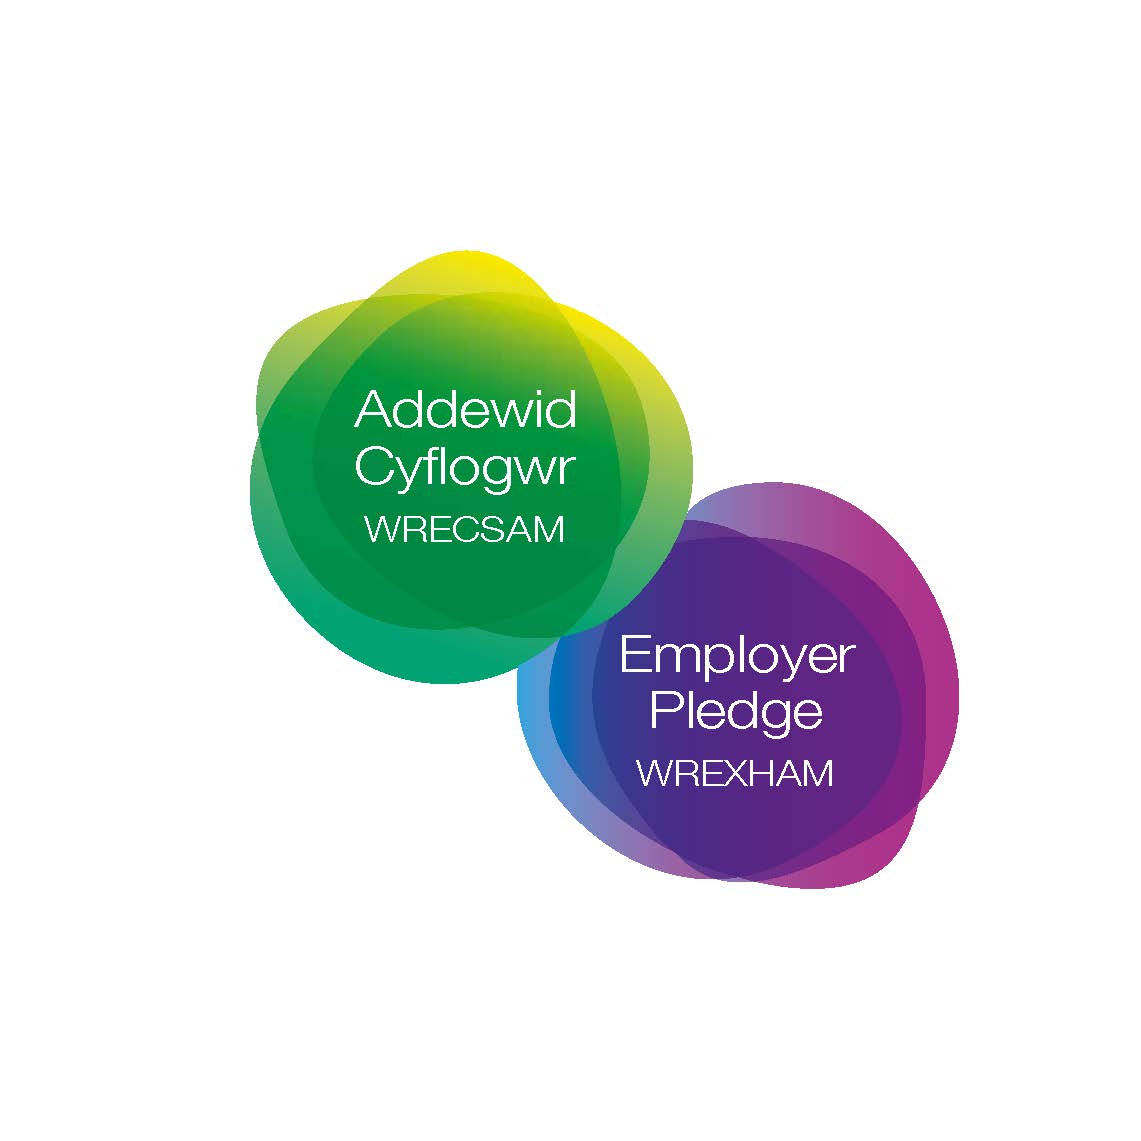 Employer pledge logo